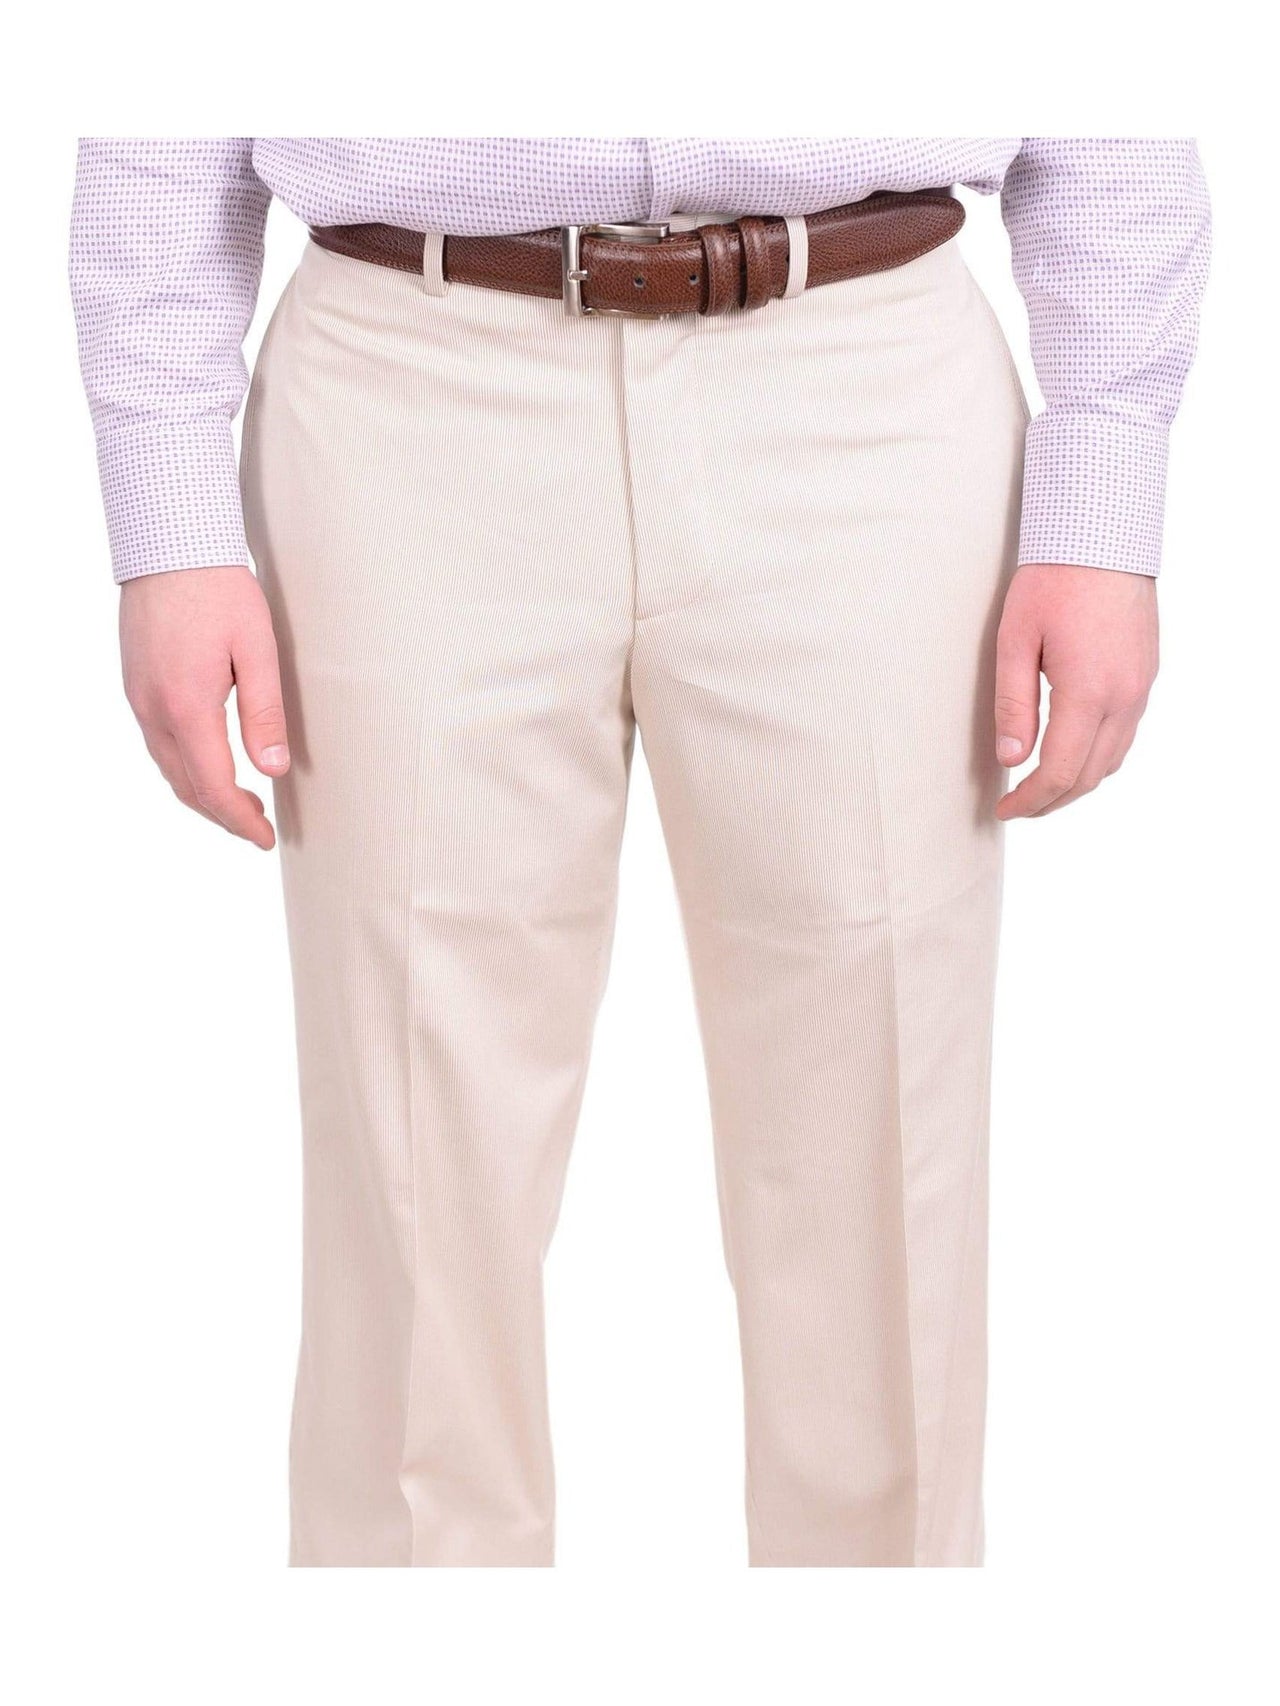 Geoffrey Beene PANTS 30X30 Geoffrey Beene Classic Fit Tan Corded Flat Front Cotton Blend Dress Pants